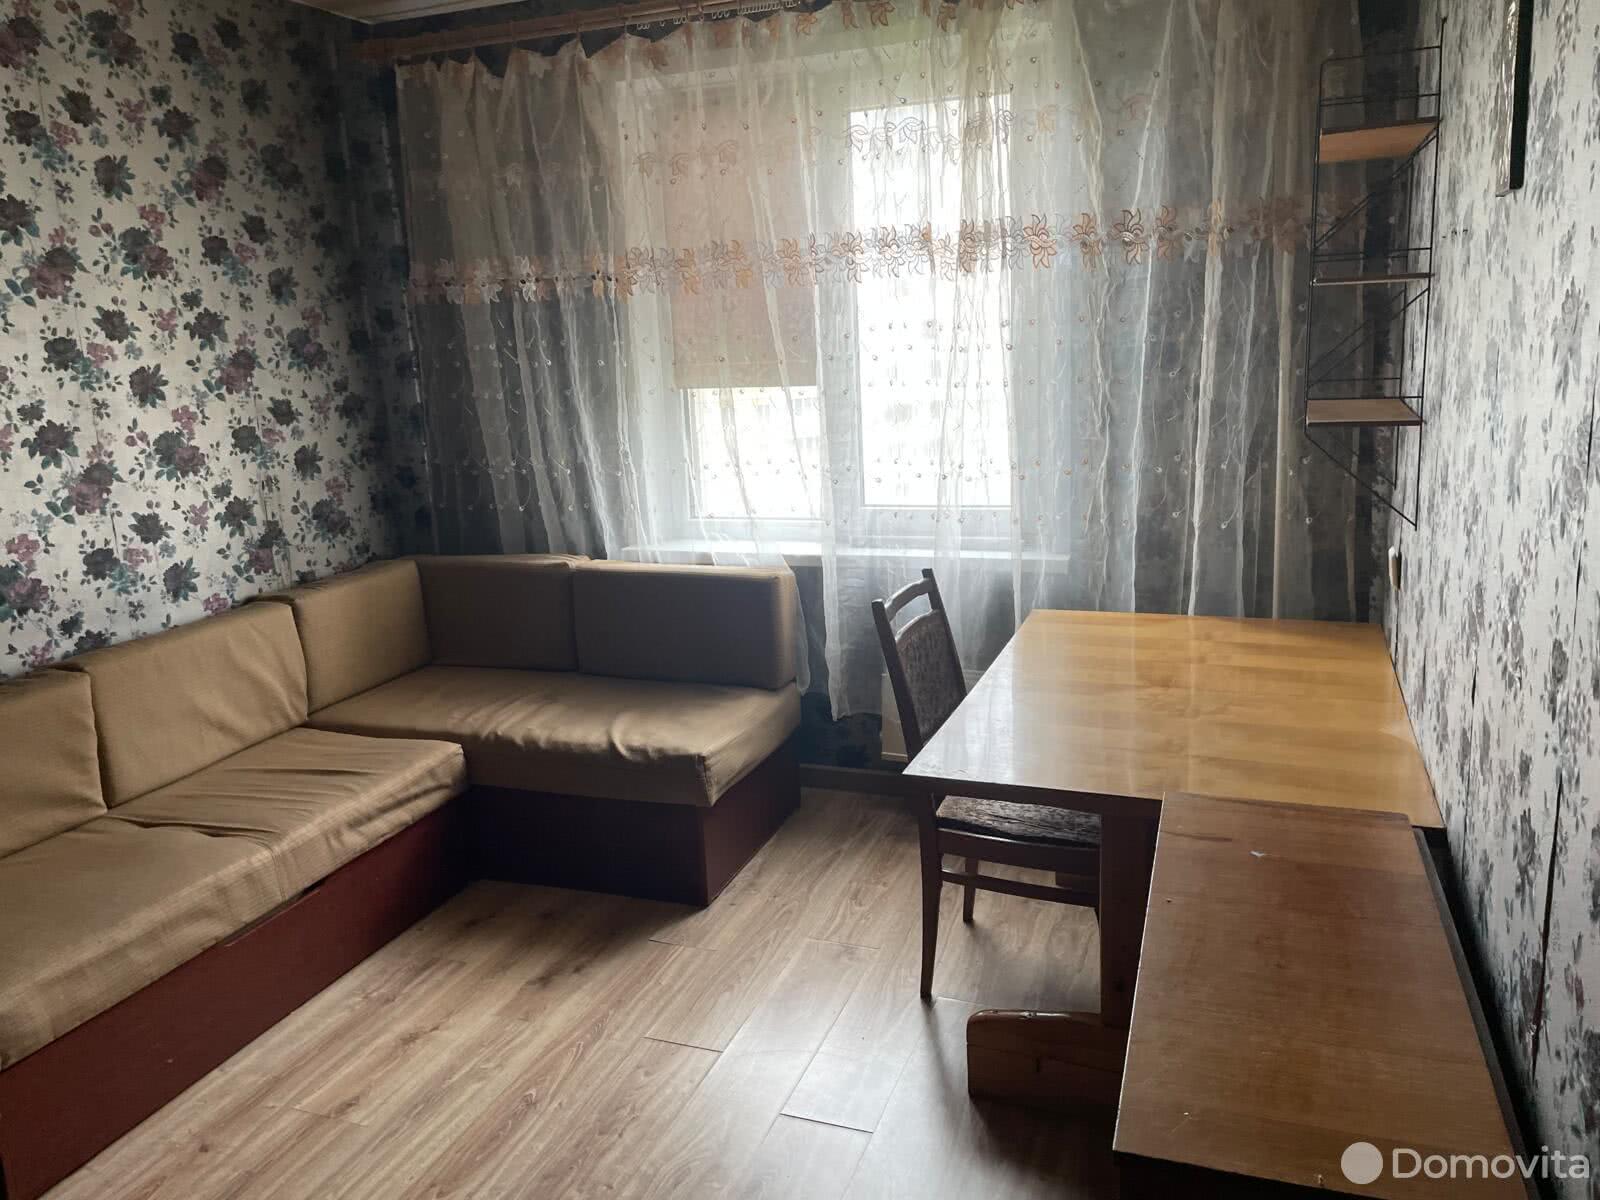 комната, Минск, ул. Громова, д. 46, стоимость аренды 323 р./мес.